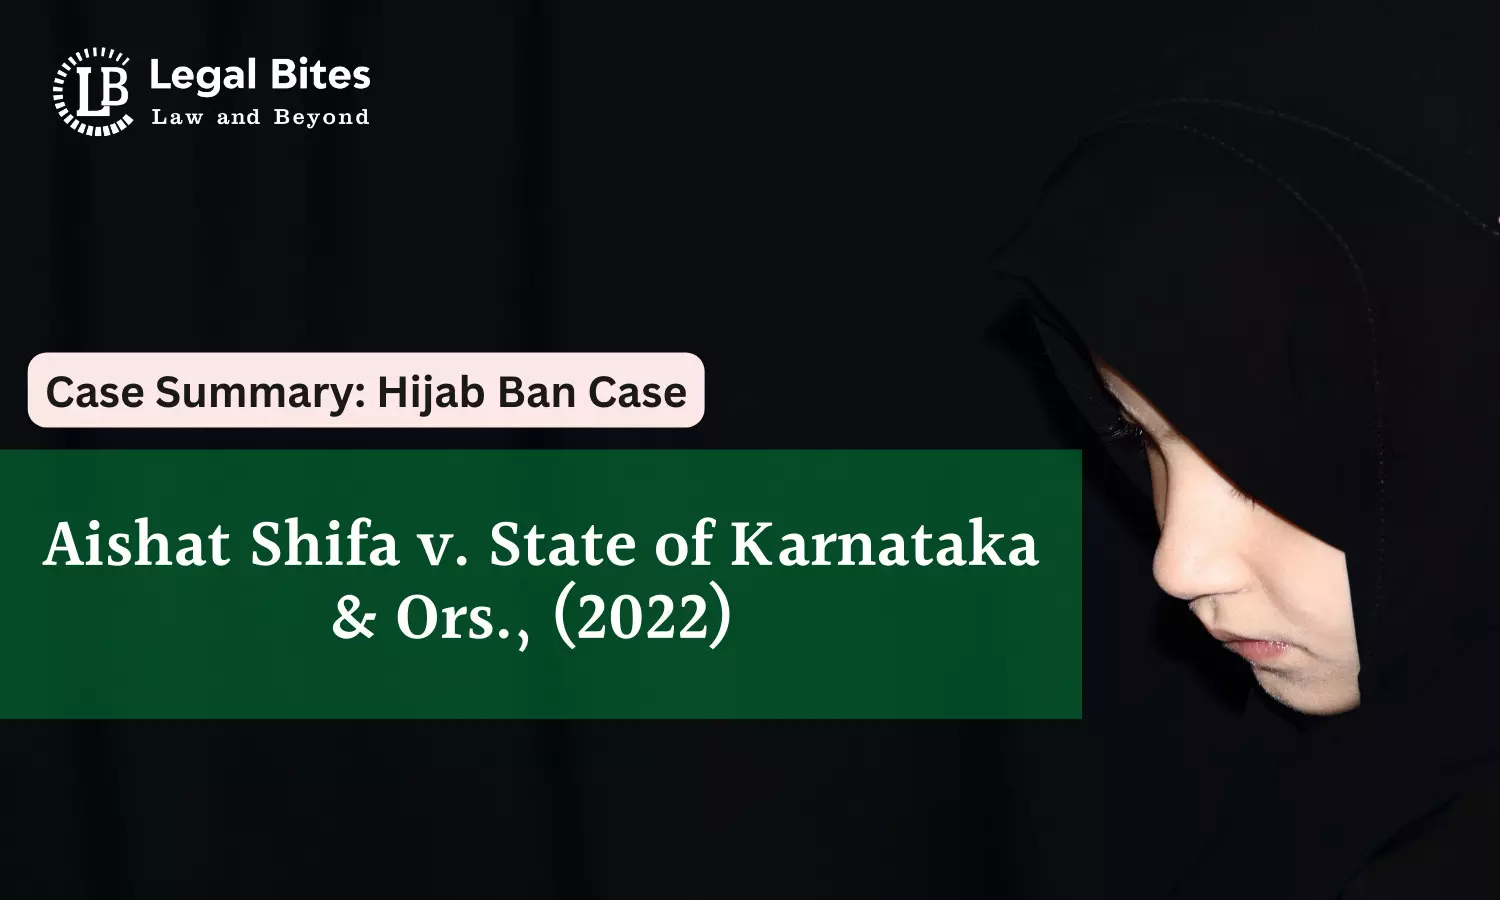 Case Analysis: Aishat Shifa v. State of Karnataka & Ors., (2022) Hijab Ban Case